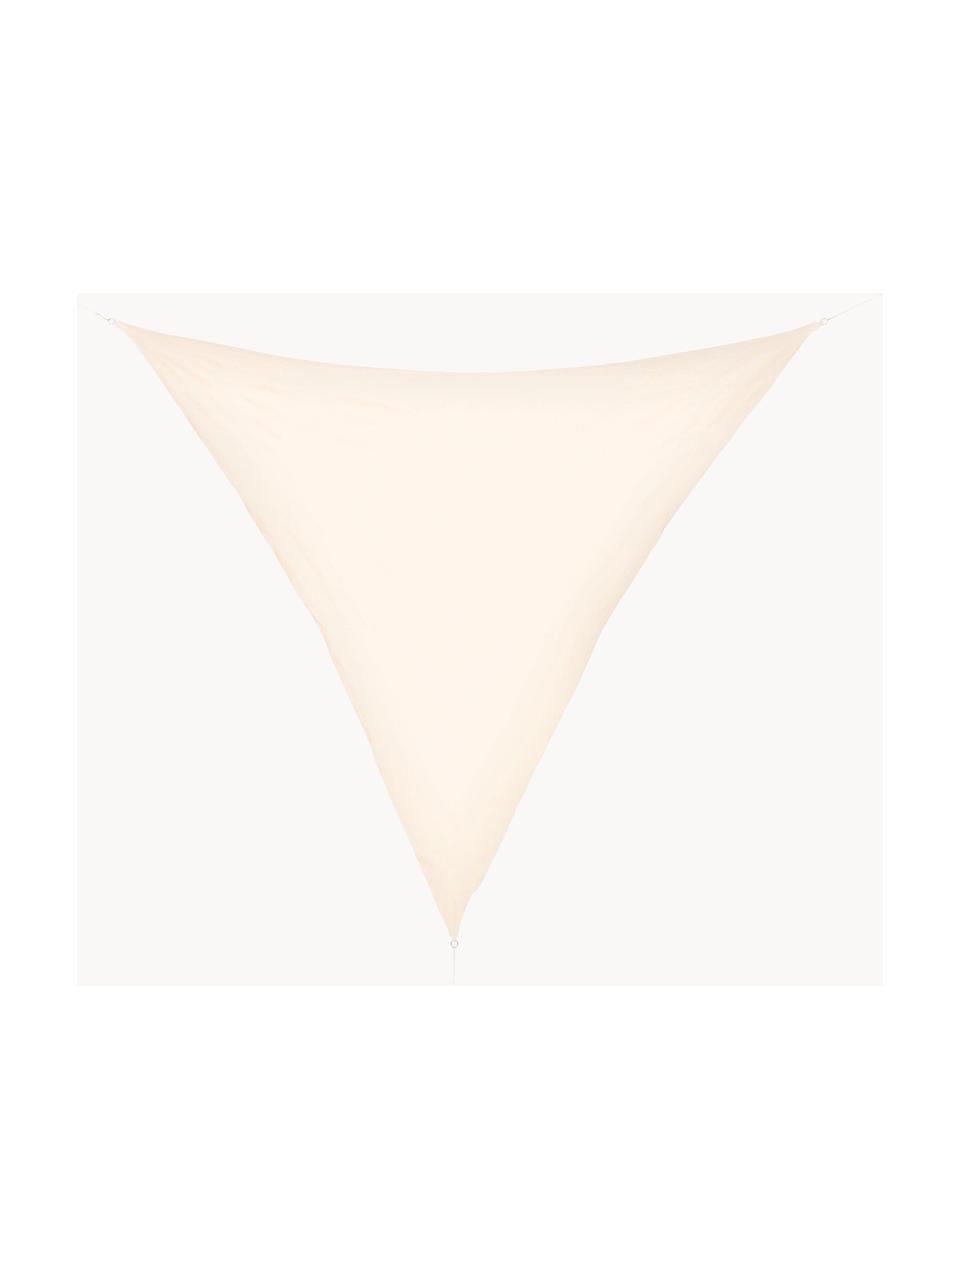 Sonnensegel Triangle, Weiß, B 360 x L 360 cm